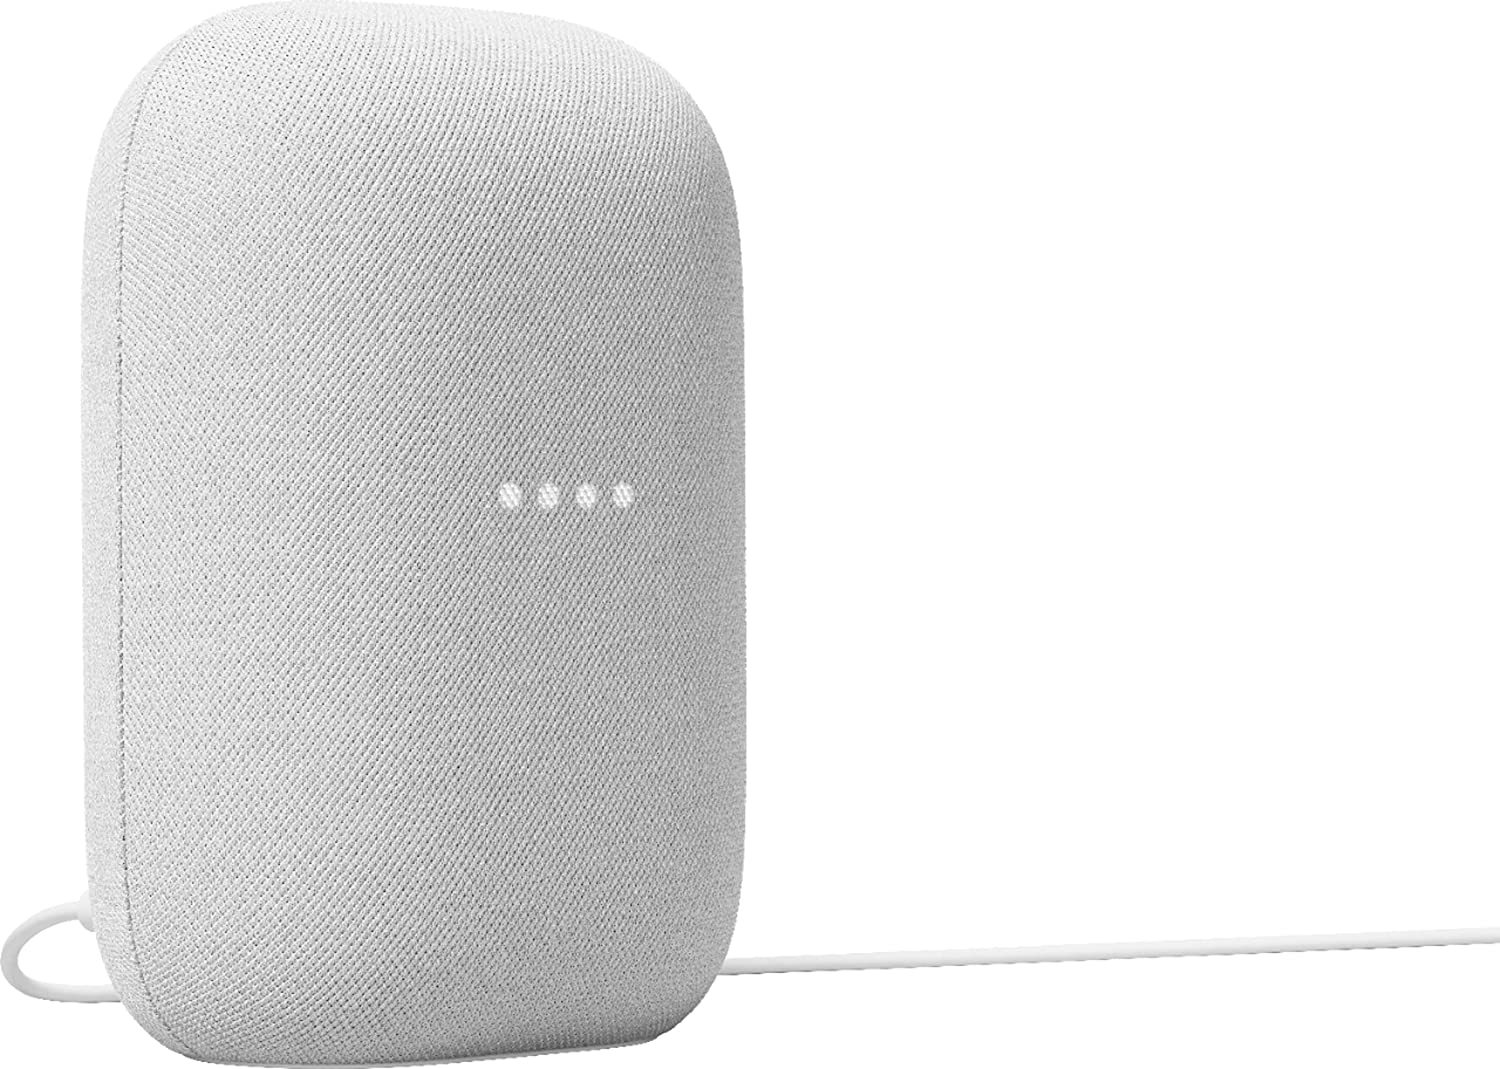 Google Nest Audio - Smart Speaker with Google Assistant - Chalk - image 4 of 4